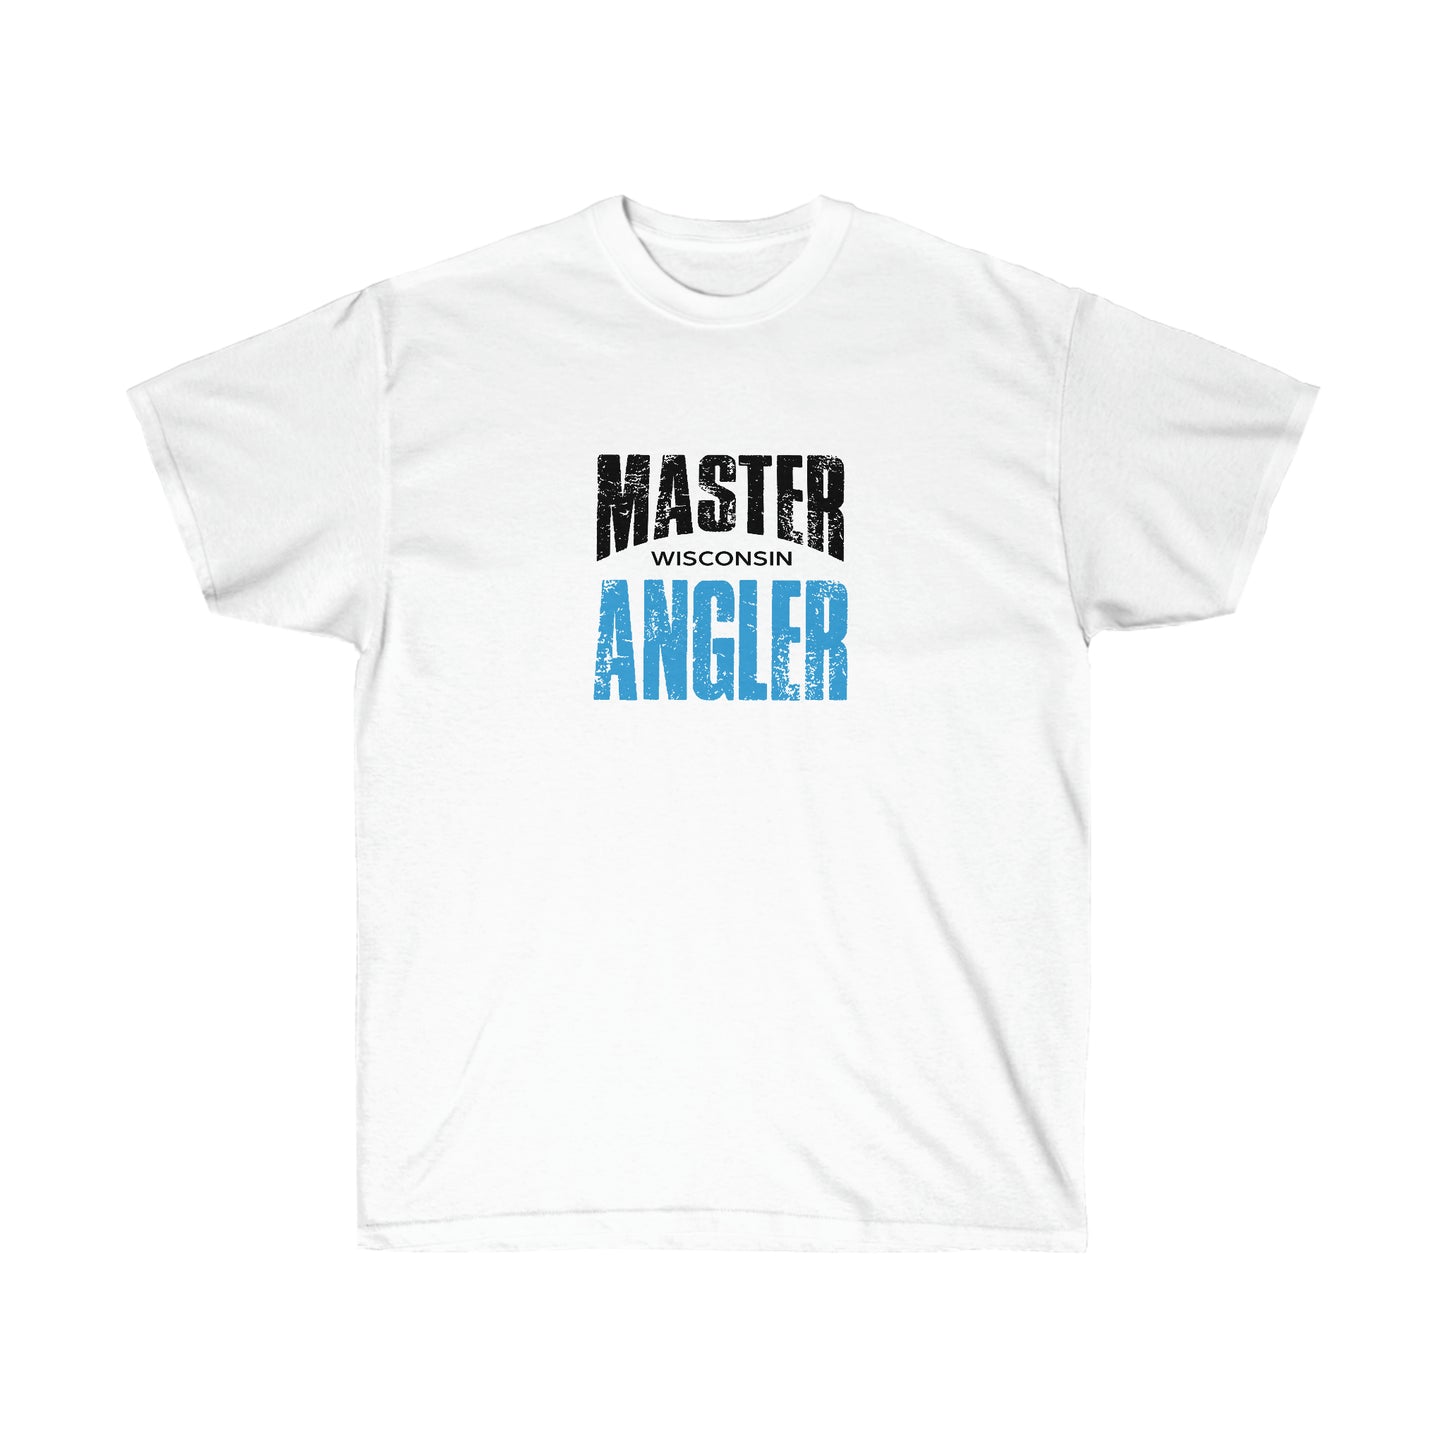 Wisconsin Master Angler Tee Blue Logo